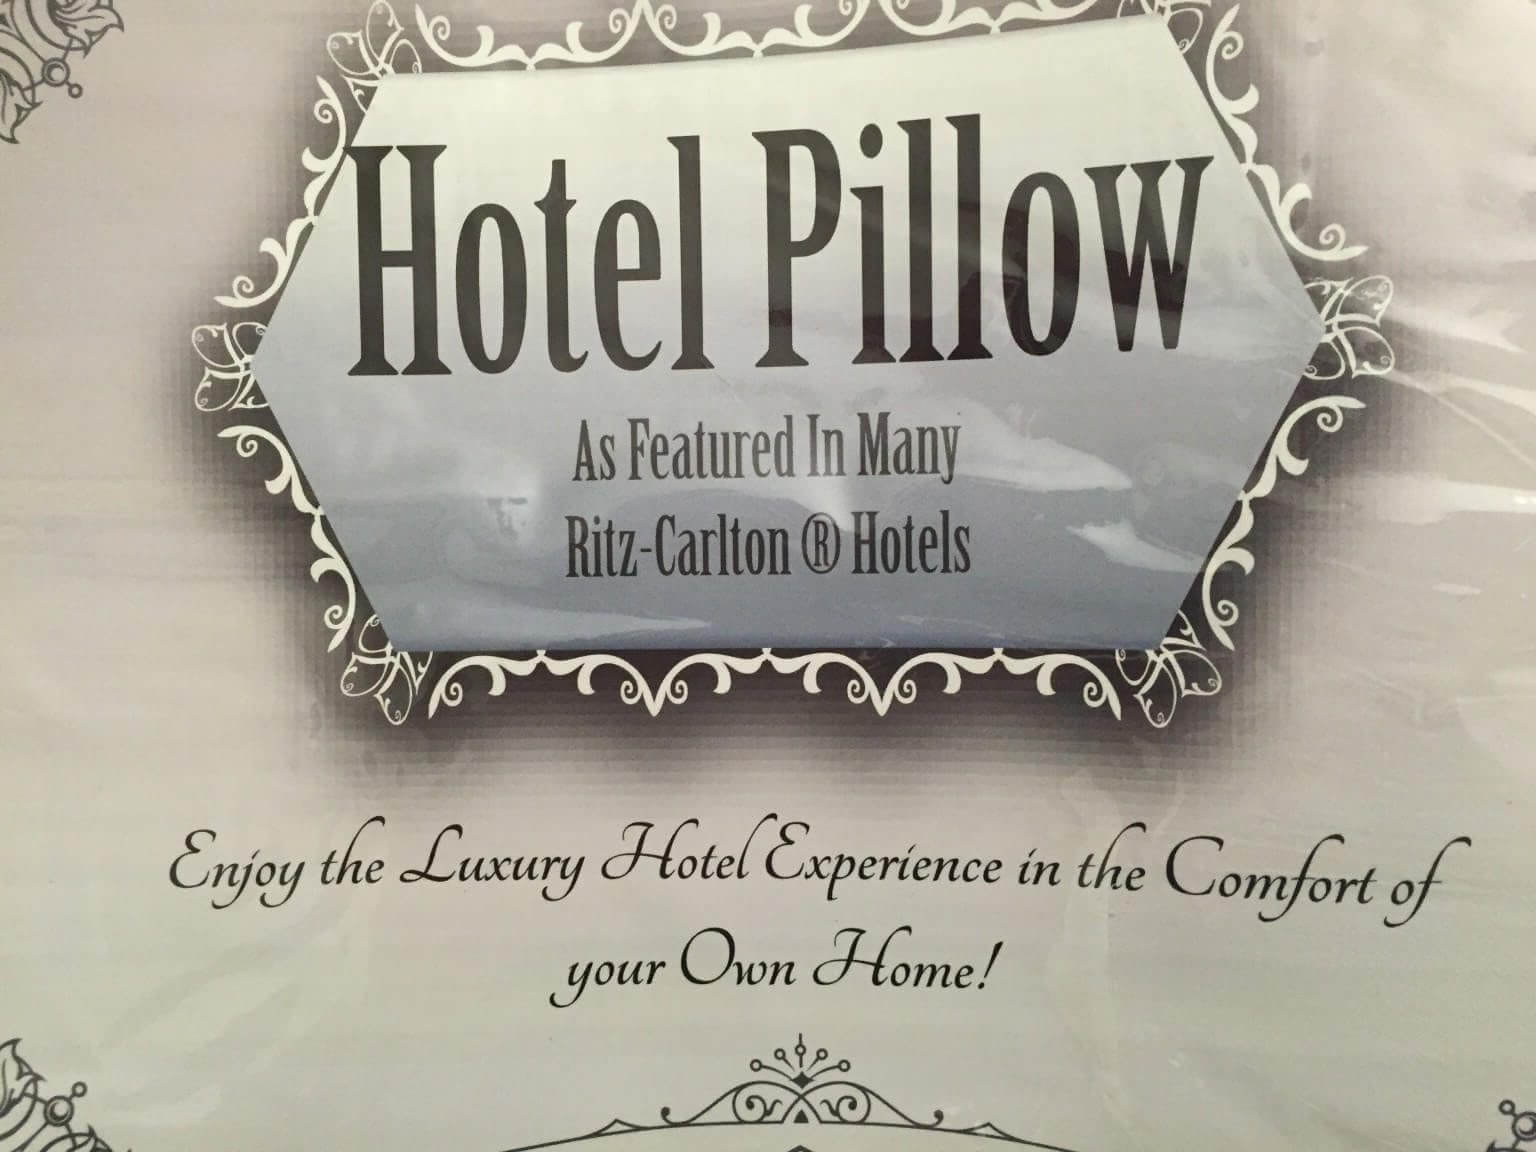 The Ritz-Carlton Hotel Down Pillow